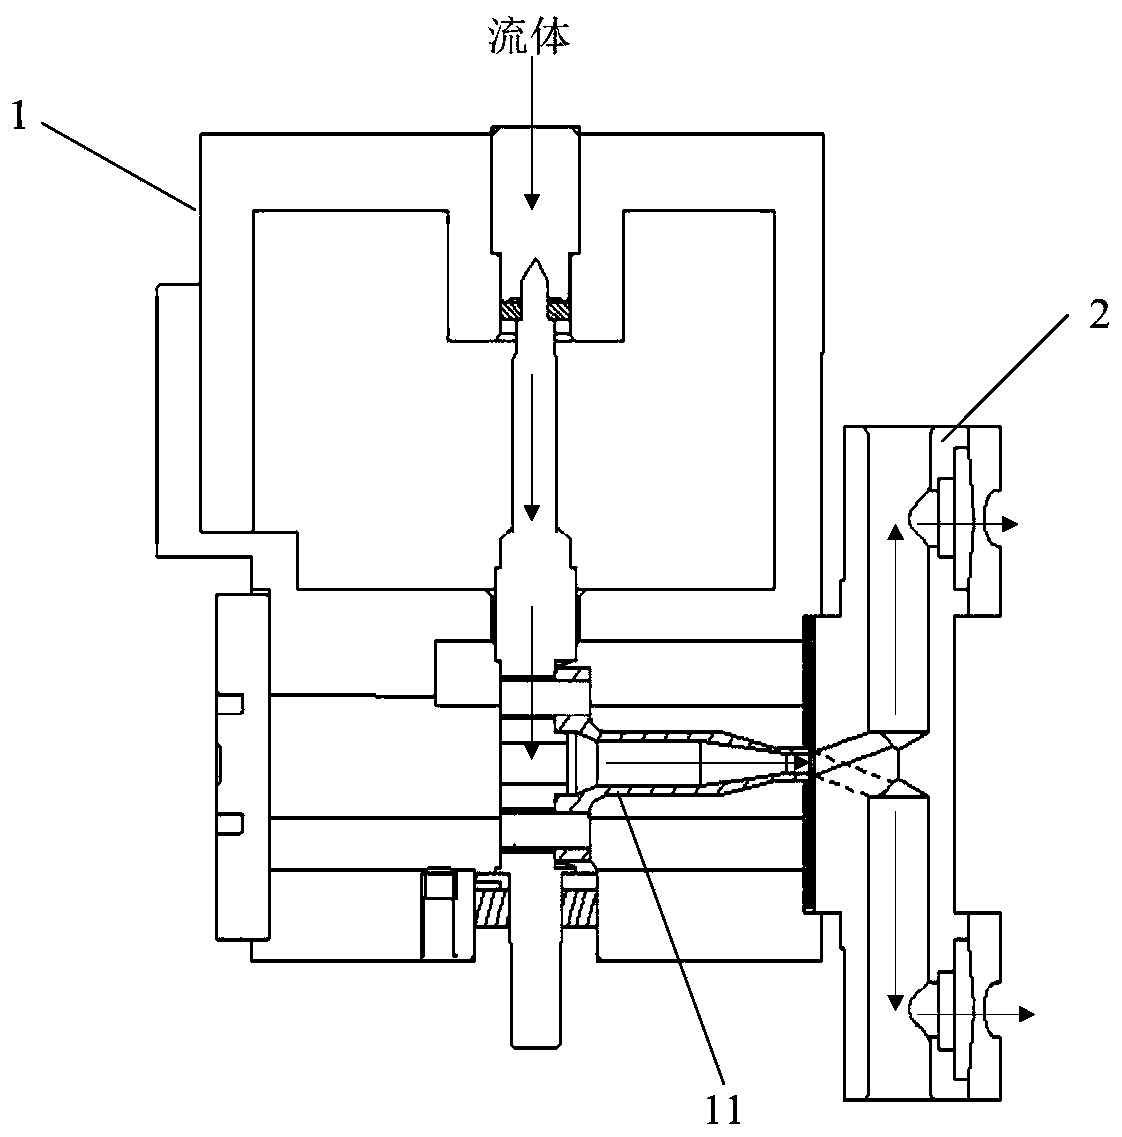 Servo valve automatic centering device and method